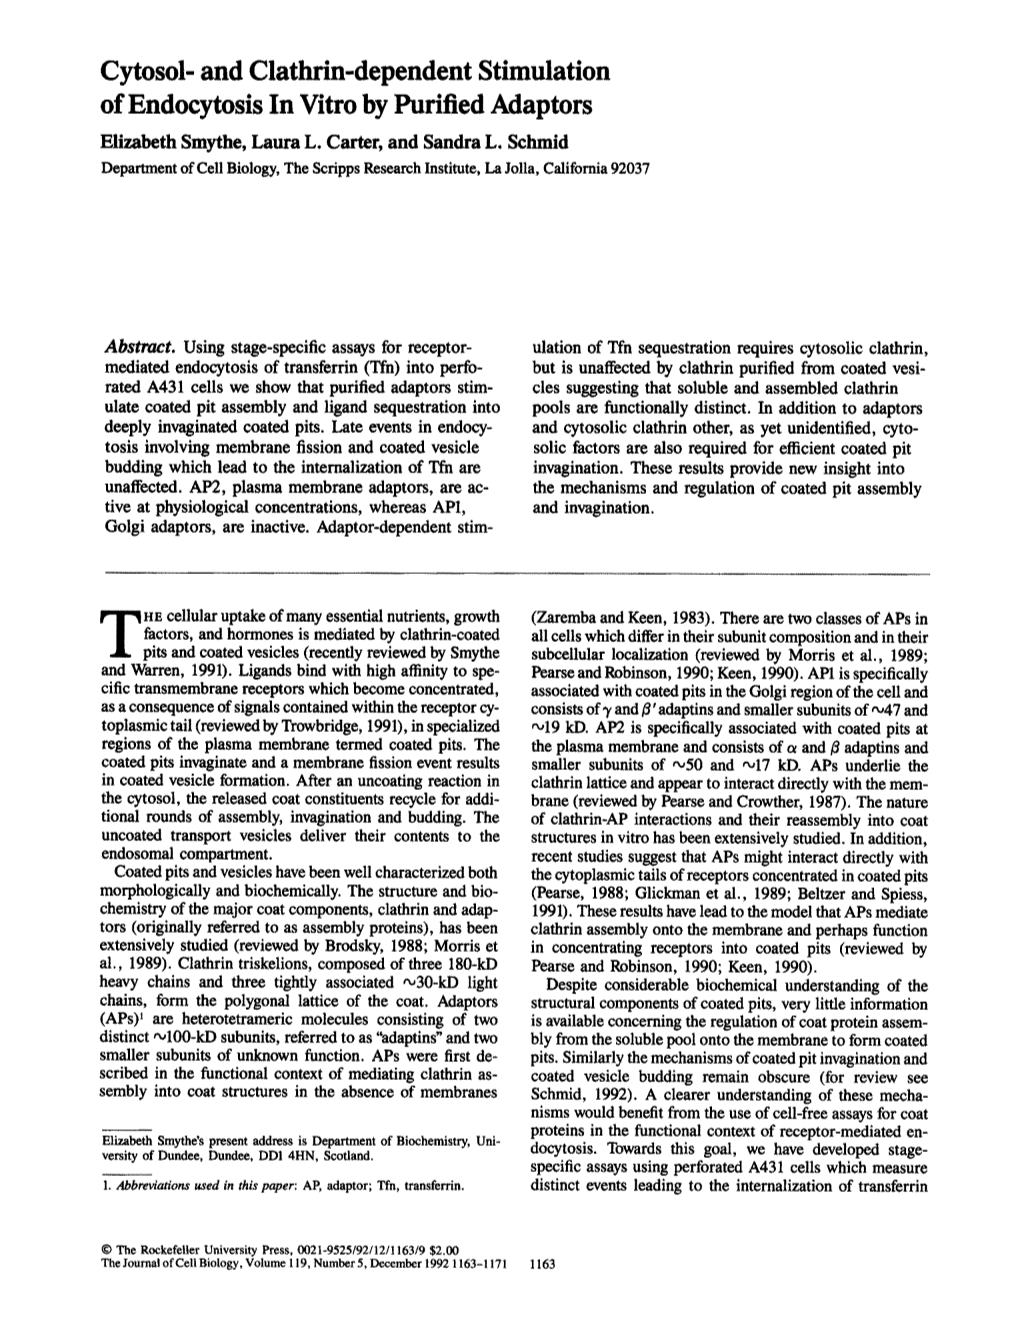 Cytosol- and Clathrin-Dependent Stimulation of Endocytosis in Vitro by Purified Adaptors Elizabeth Smythe, Laura L